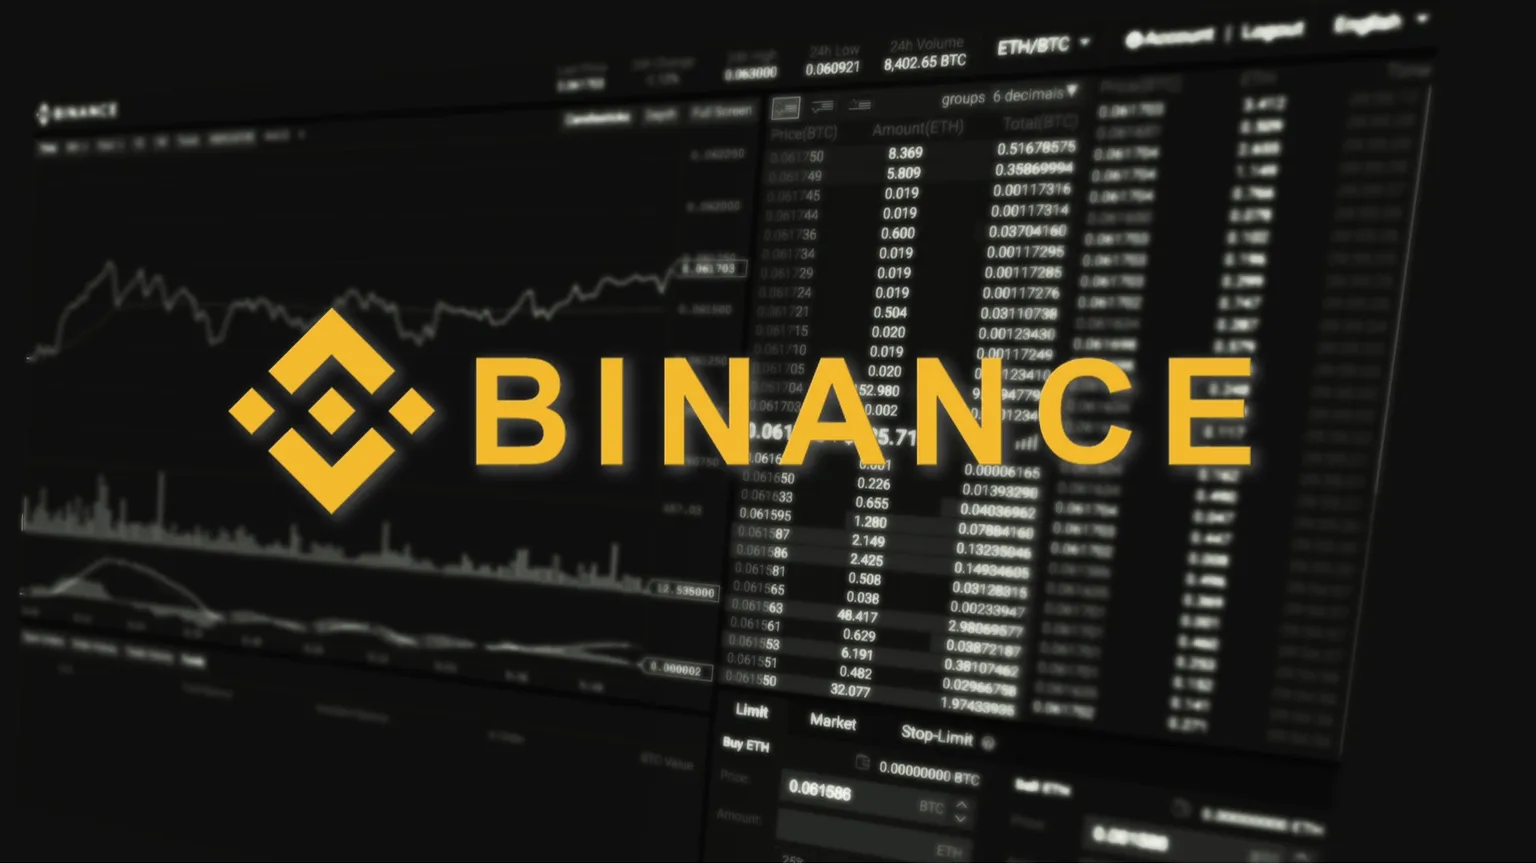 Binance is a popular crypto exchange. Image: Shutterstock.